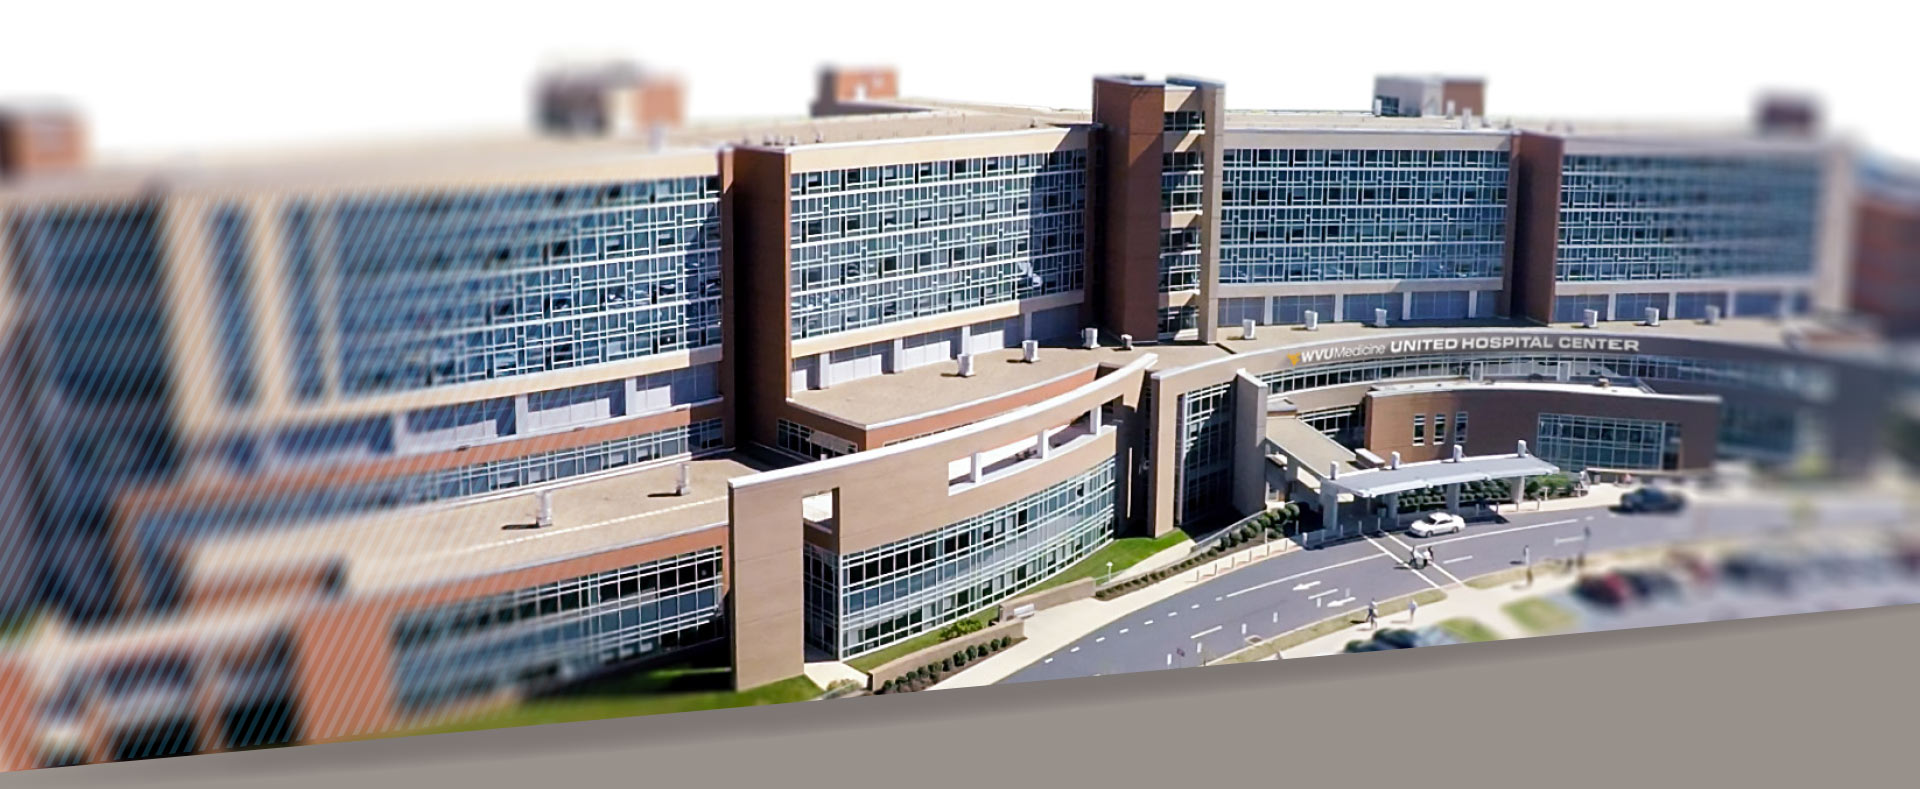 WVU Medicine United Hospital Center (UHC)